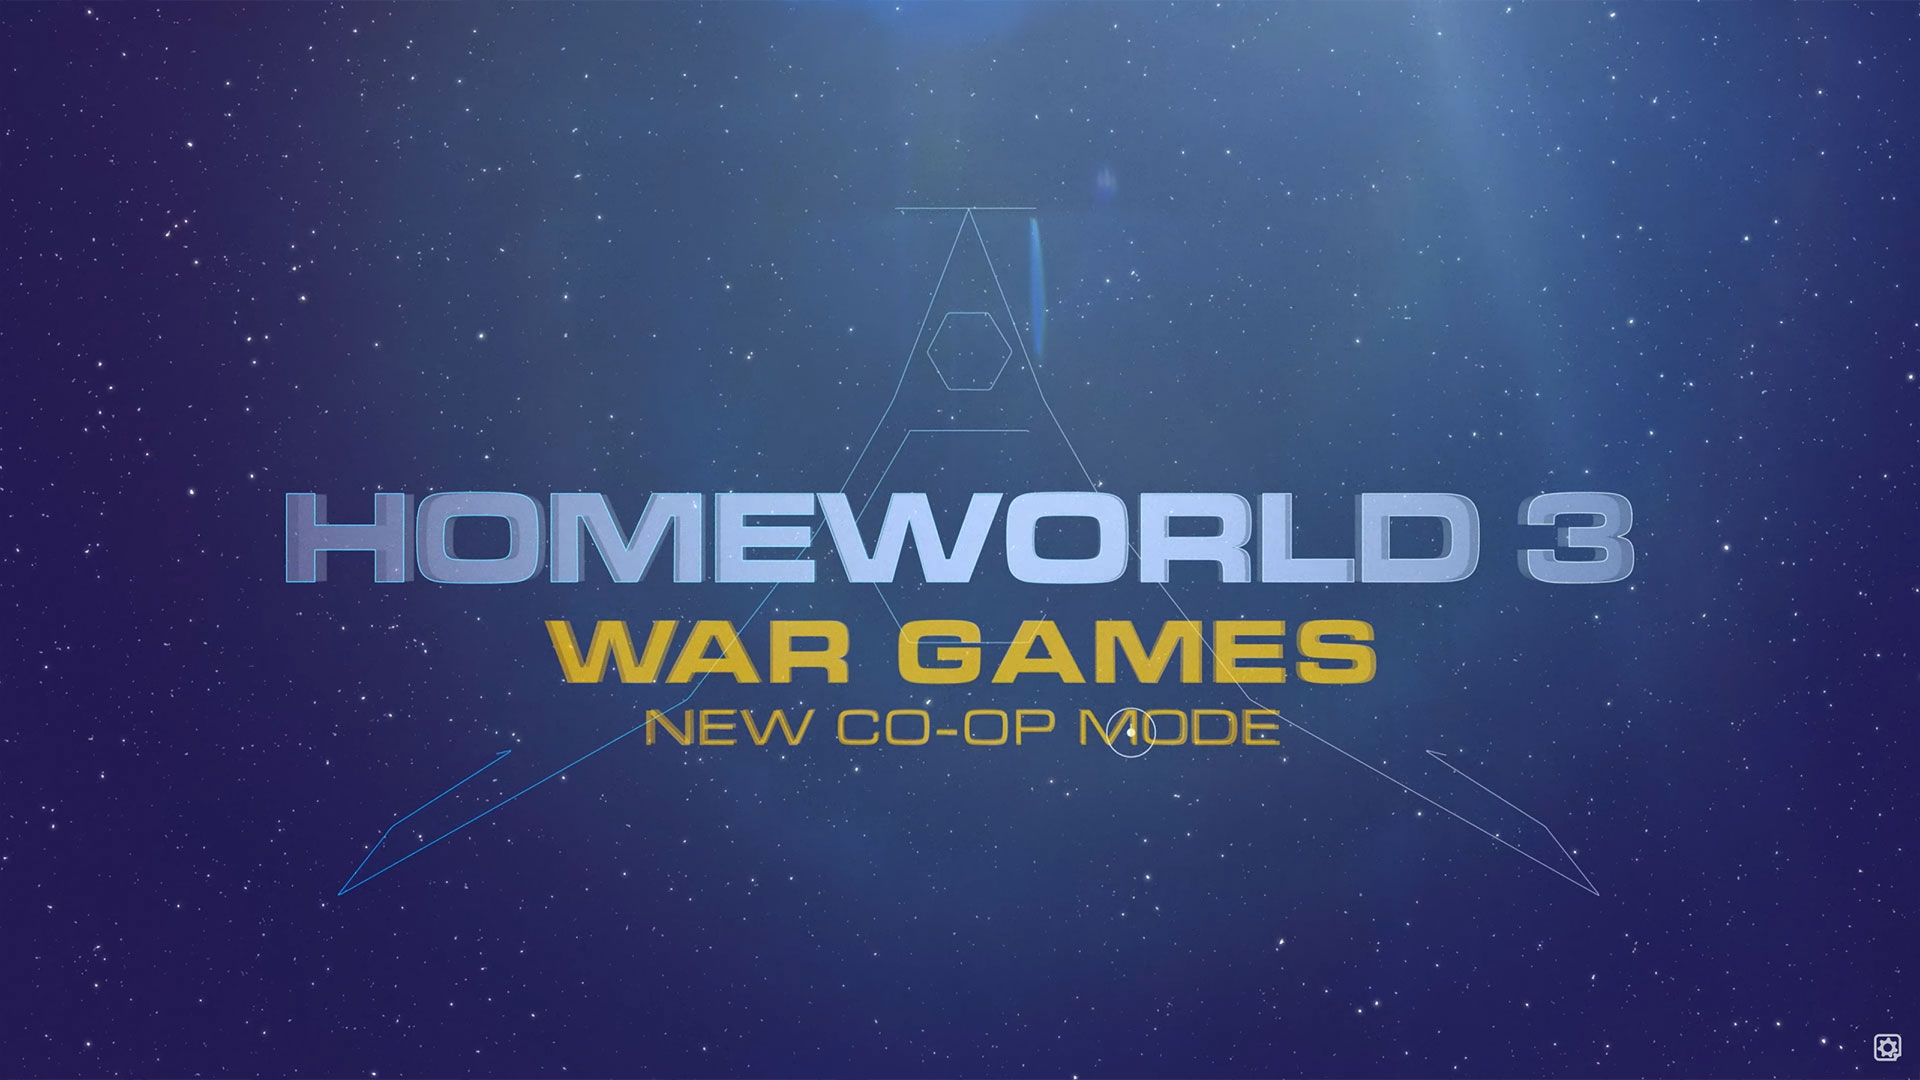 Homeworld 3 has announced a new game mode called War Games